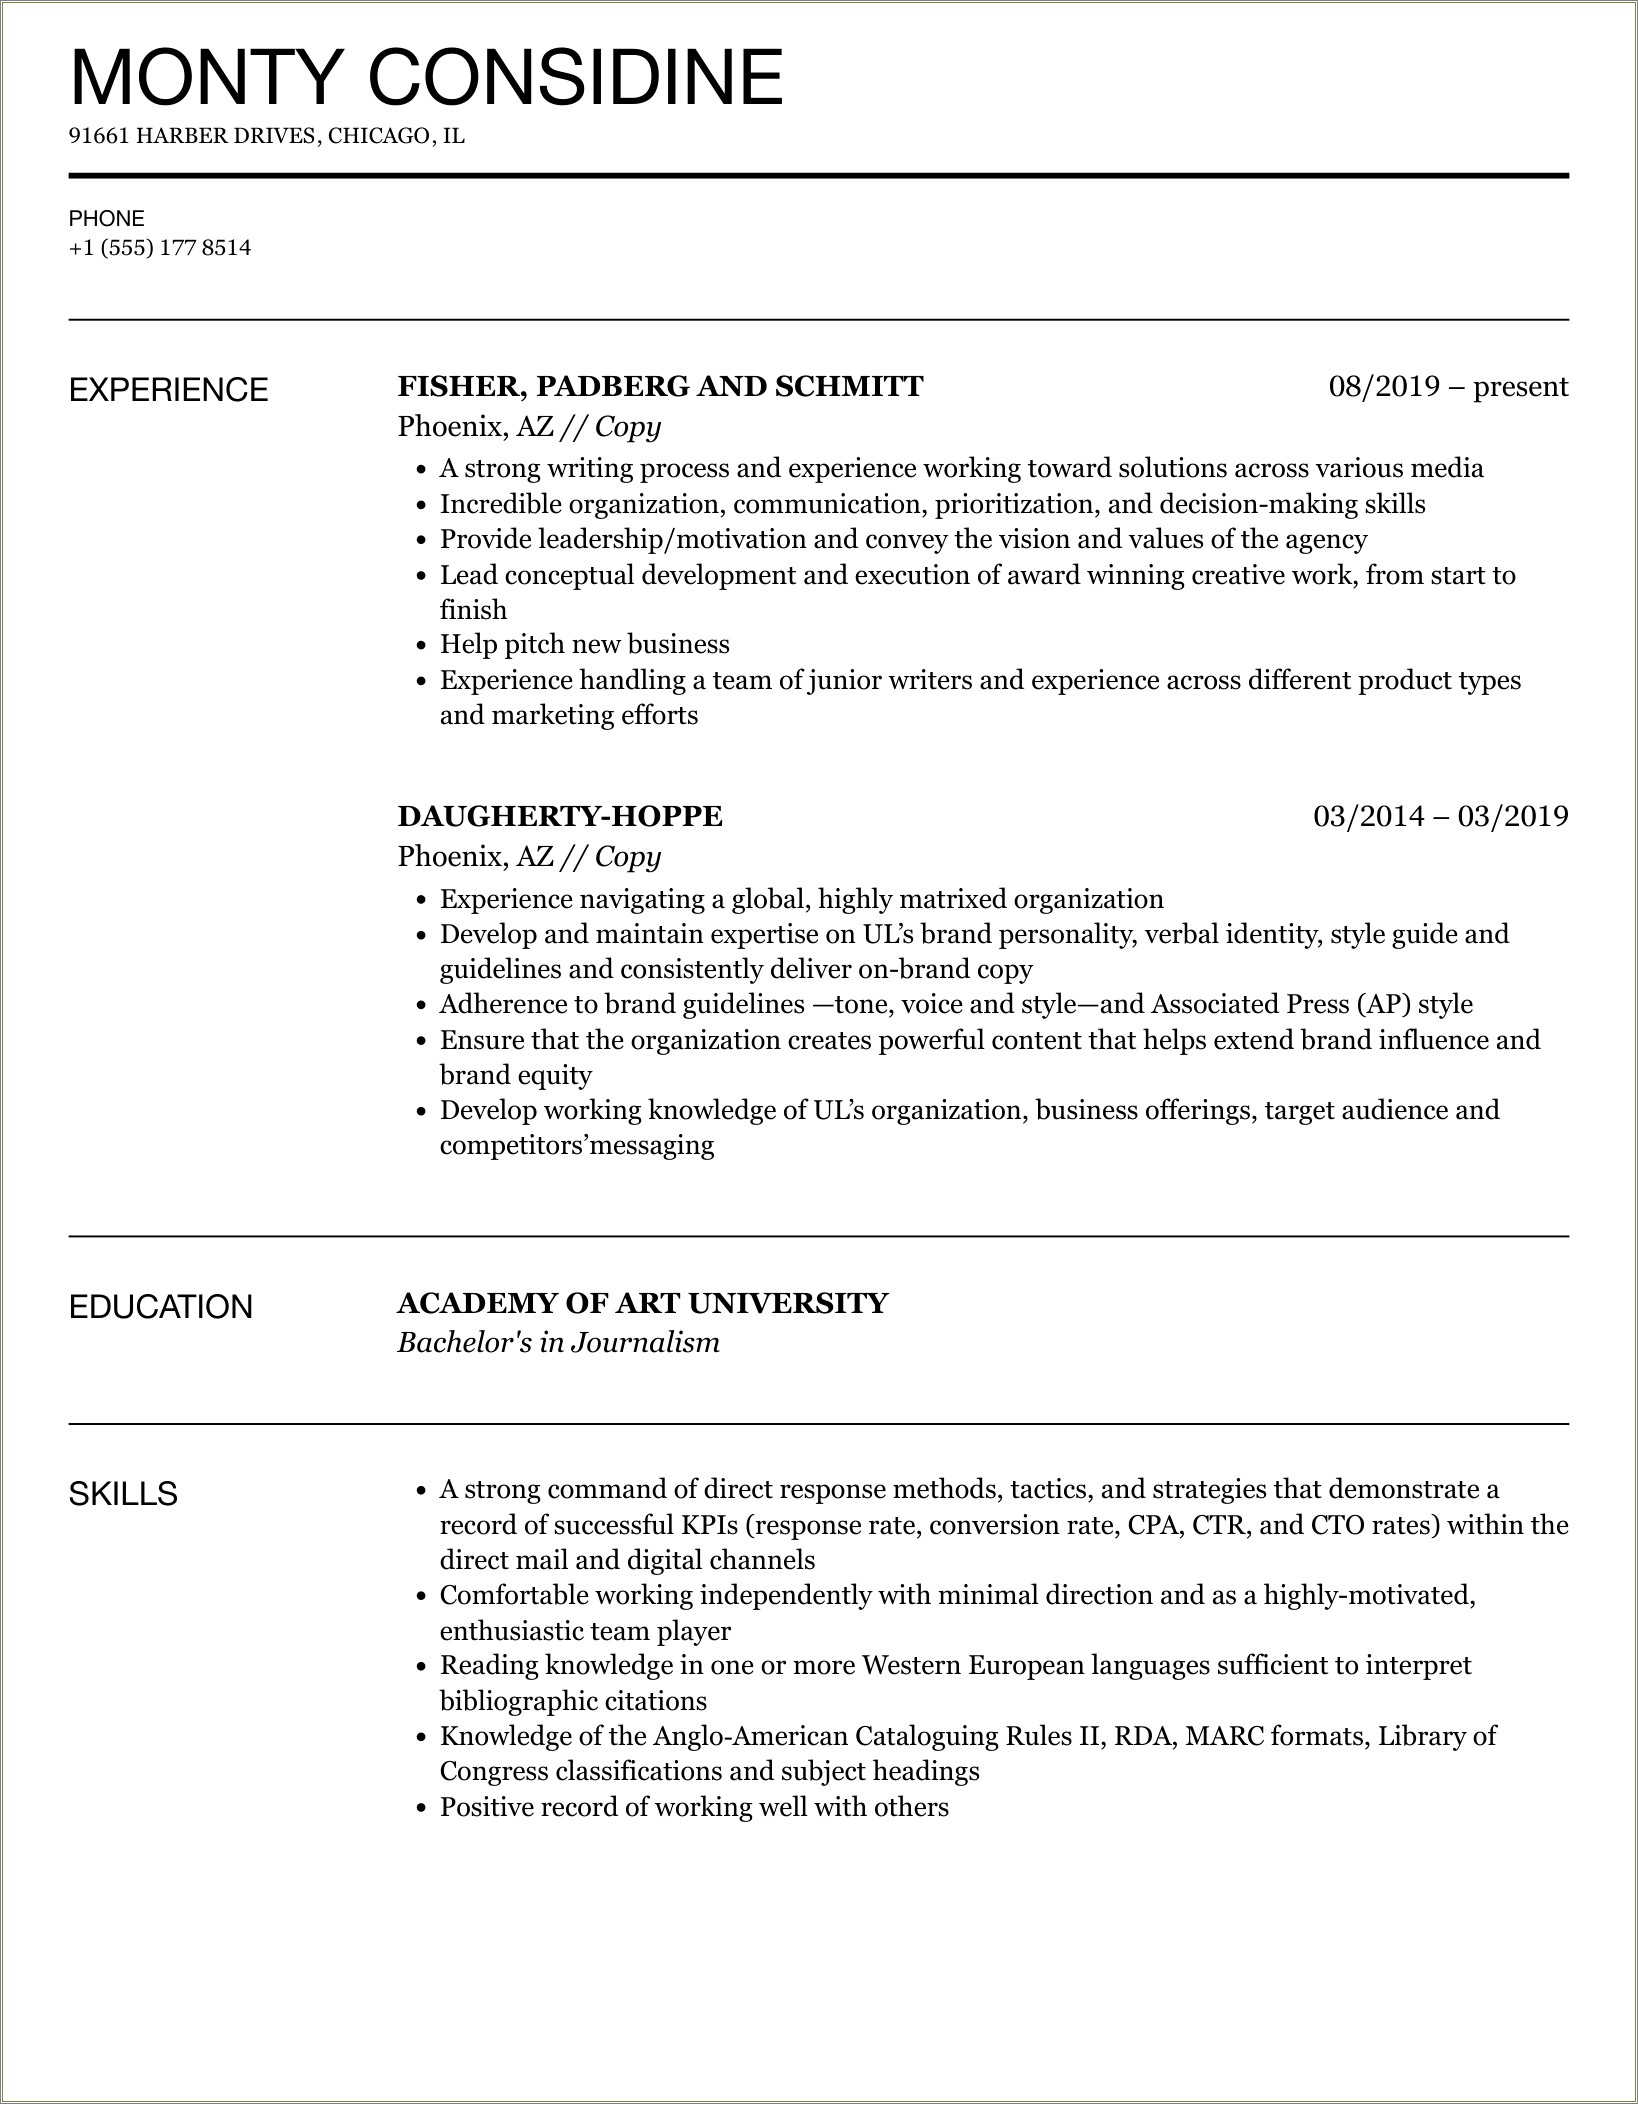 Resume Job Description For Staples Copy And Print